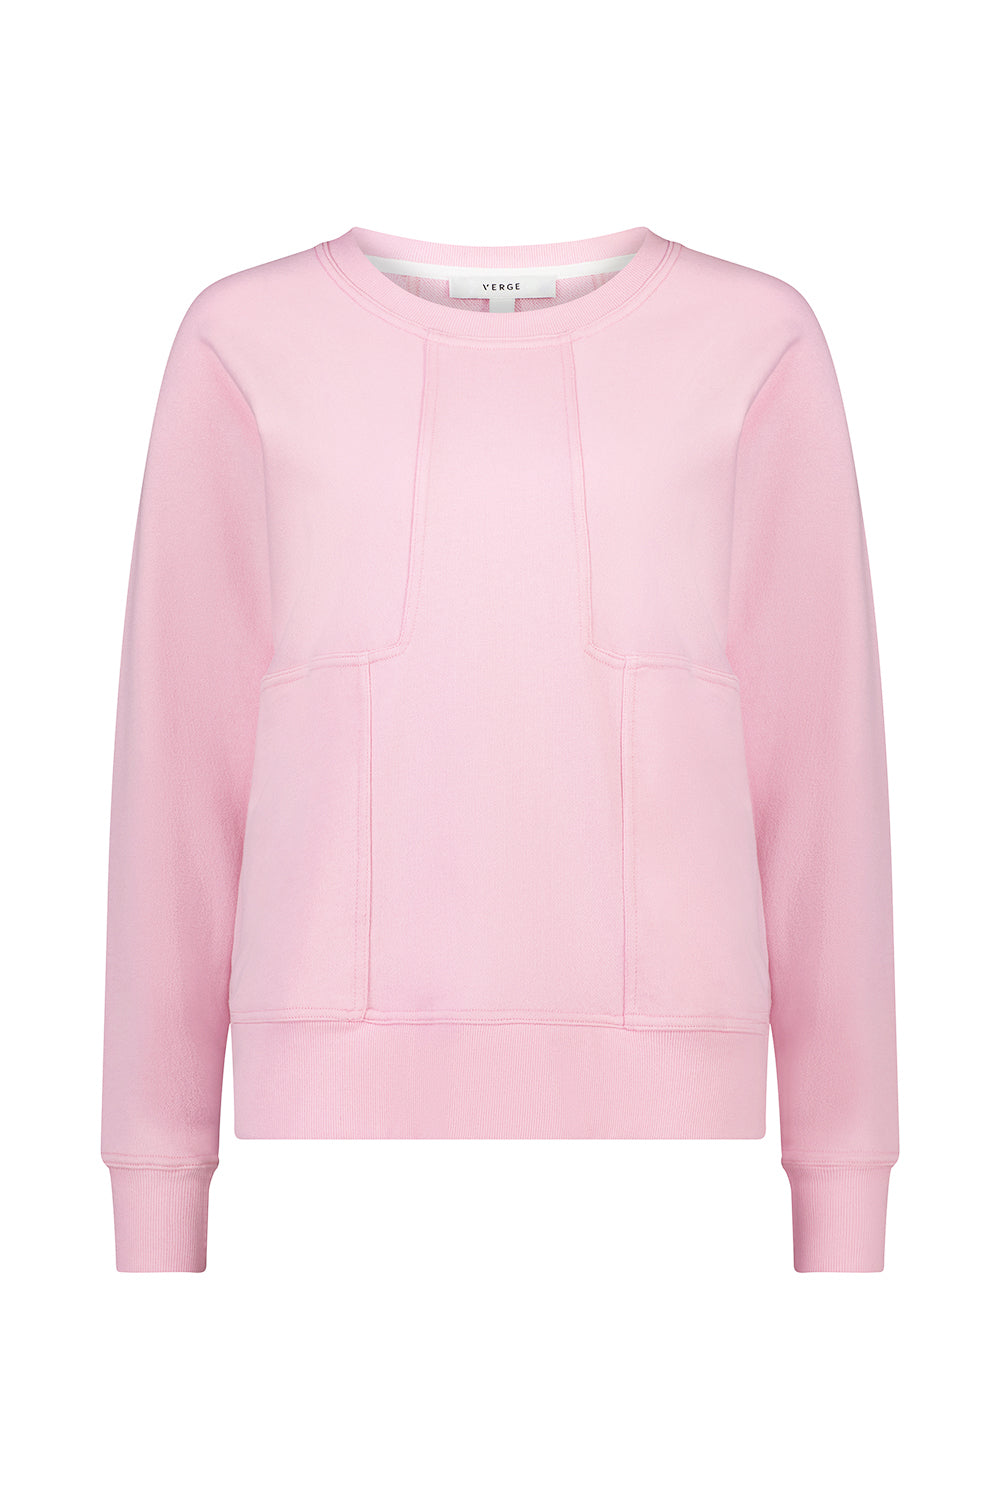 Pop Sweater - Flamingo - VERGE